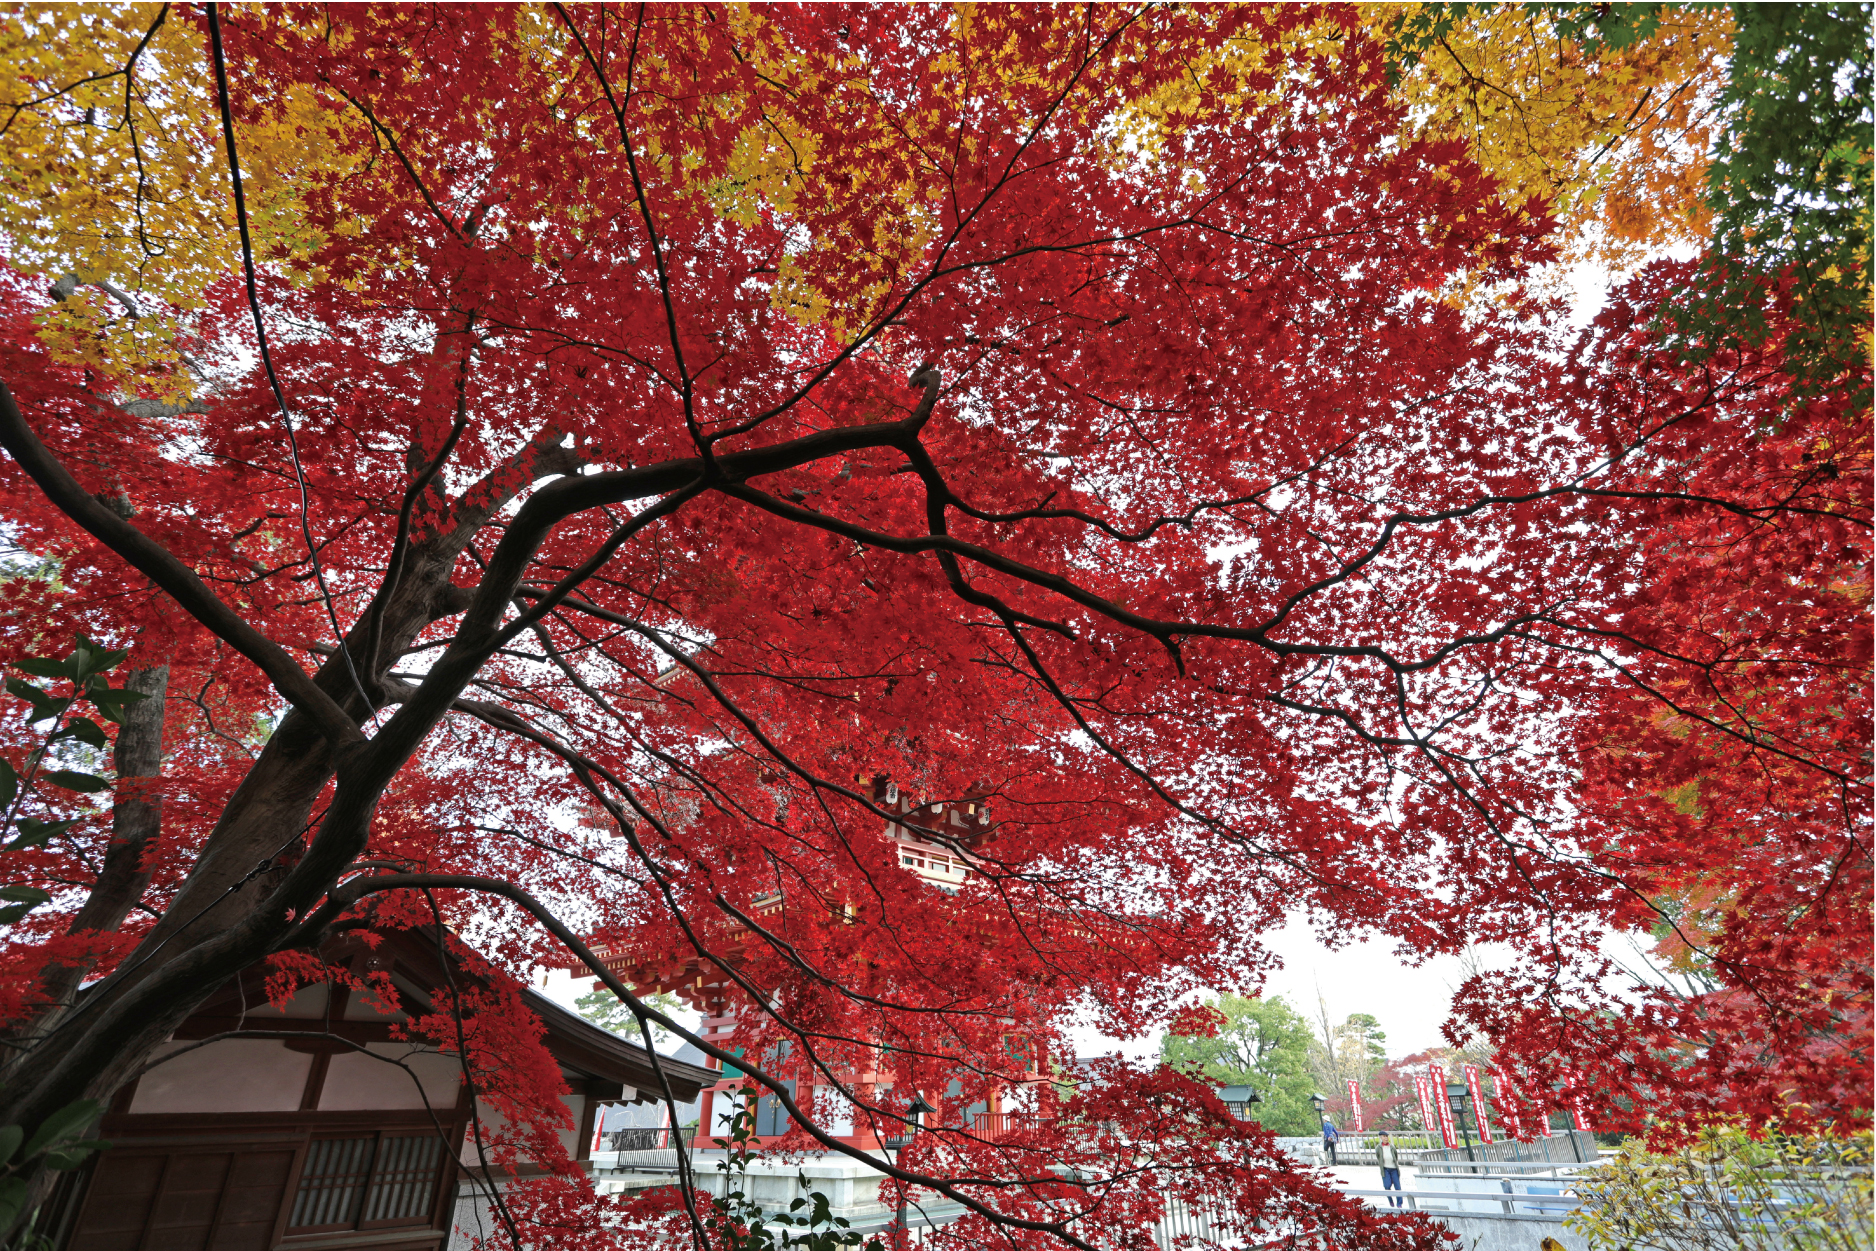 Takahata Fudo-son Autumn festival